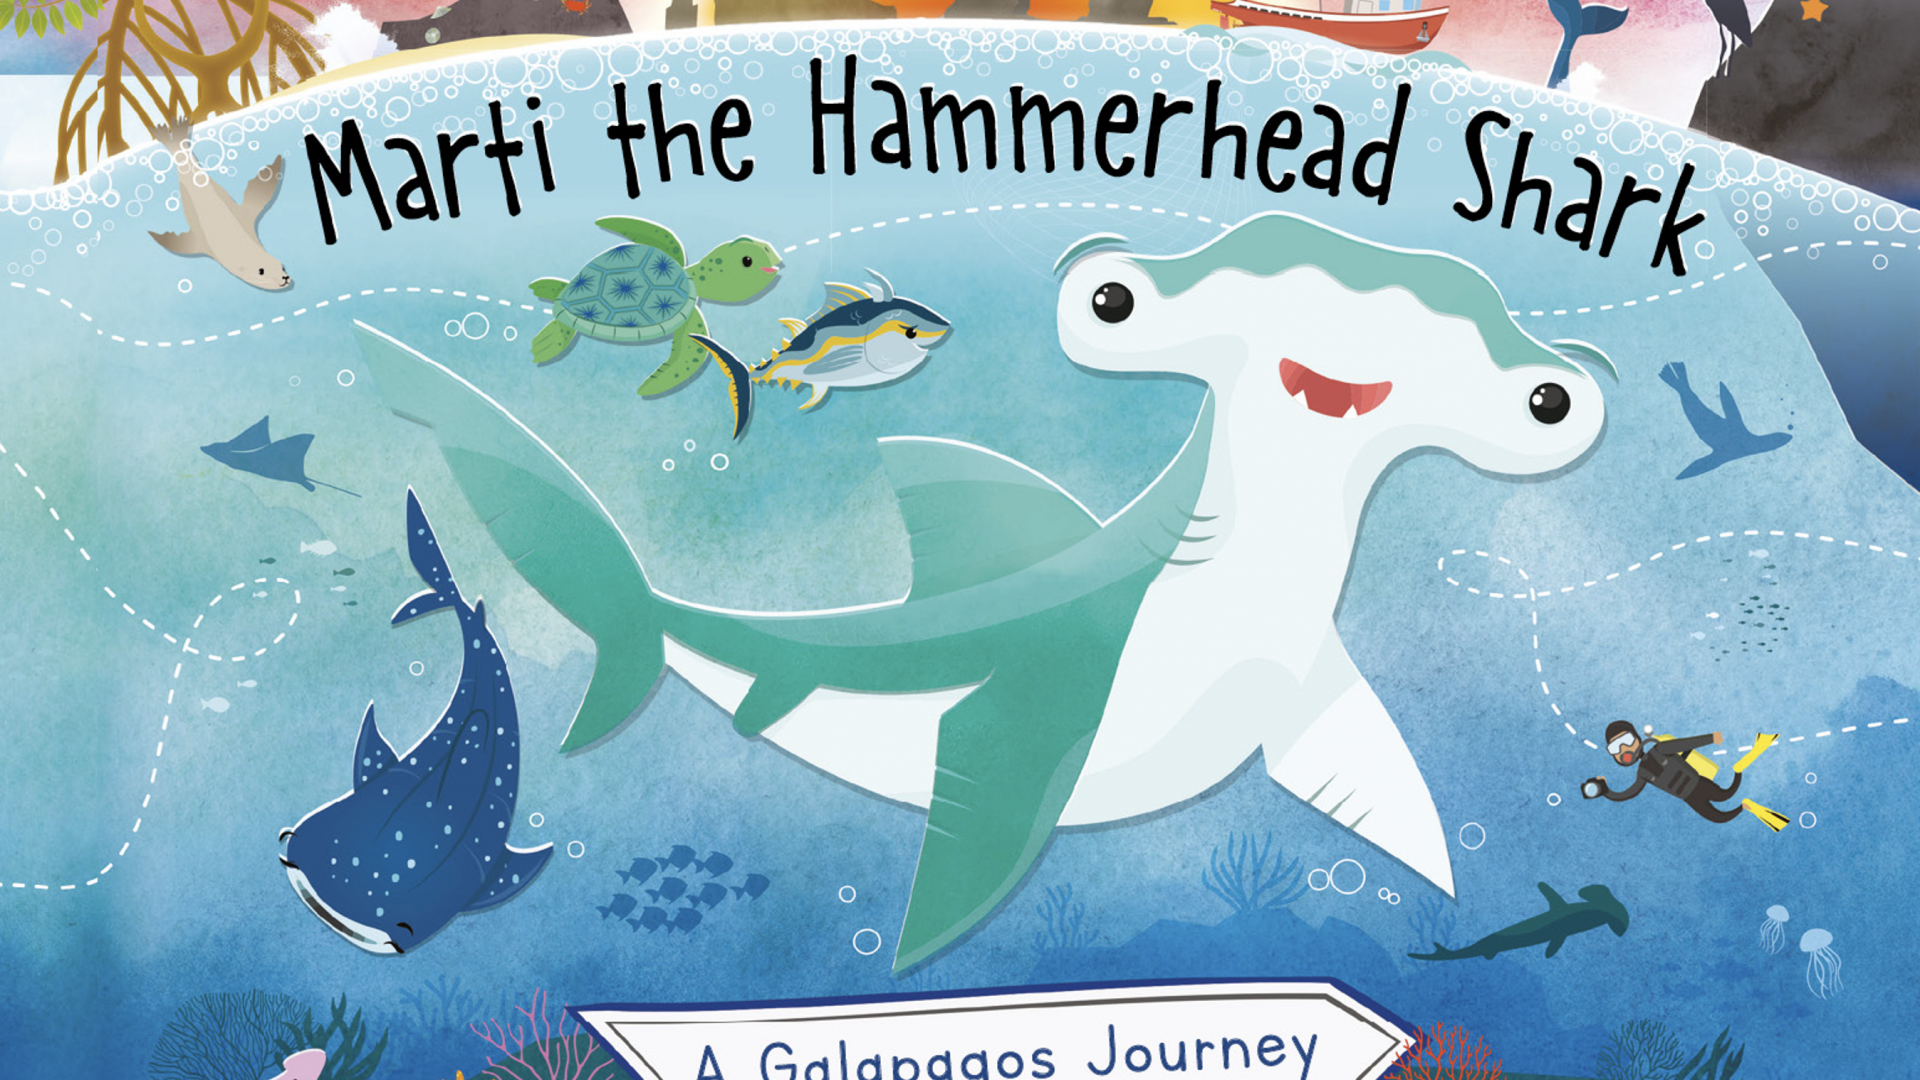 Children's story illustration of a happy hammerhead shark in the ocean.